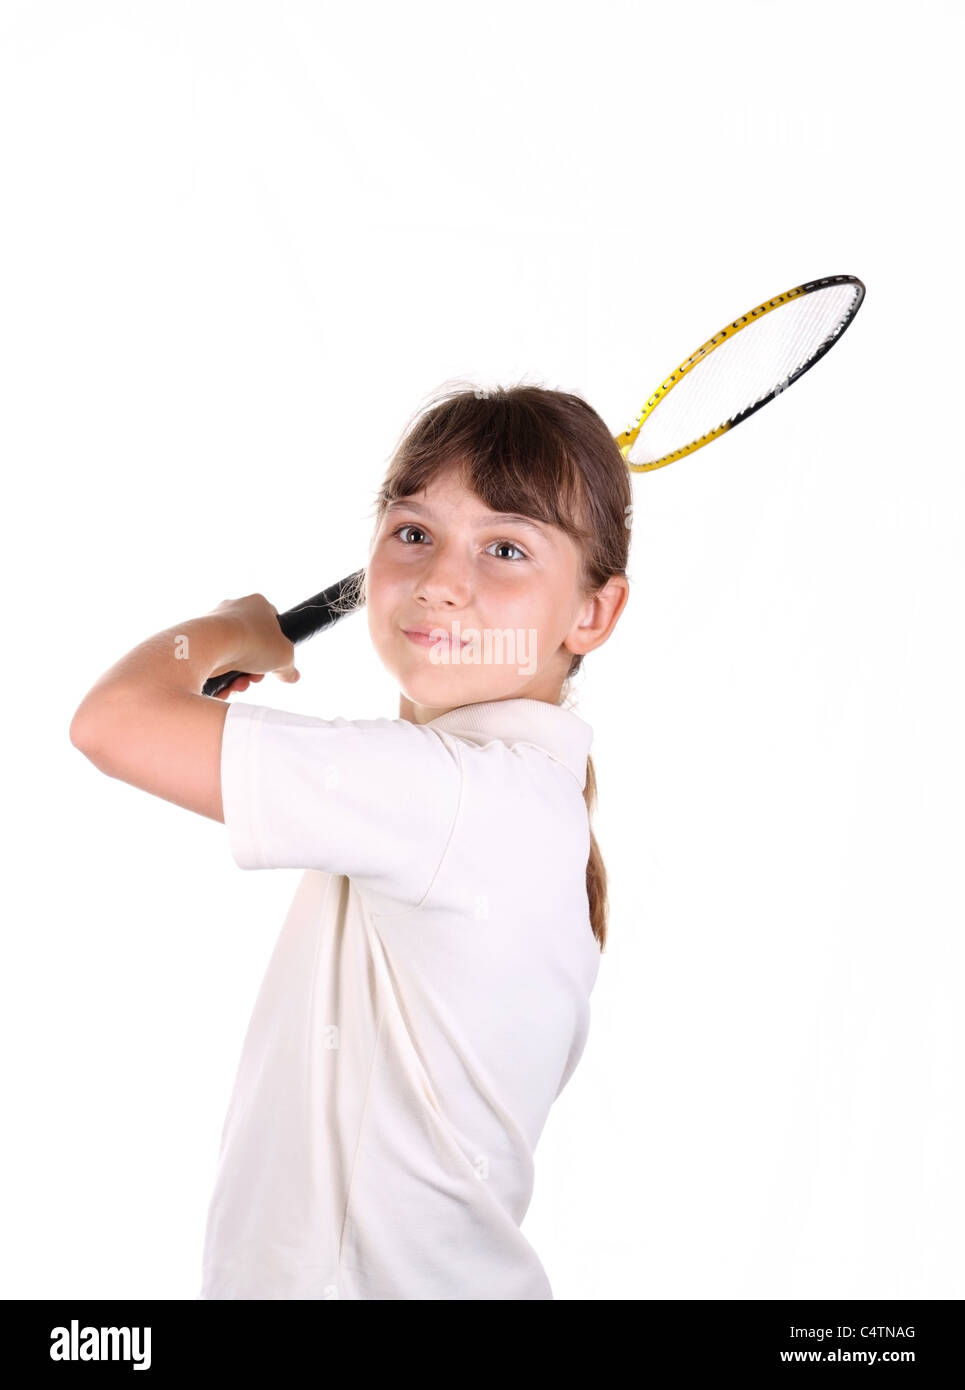 Mädchen mit Badminton-Schläger Stockfoto